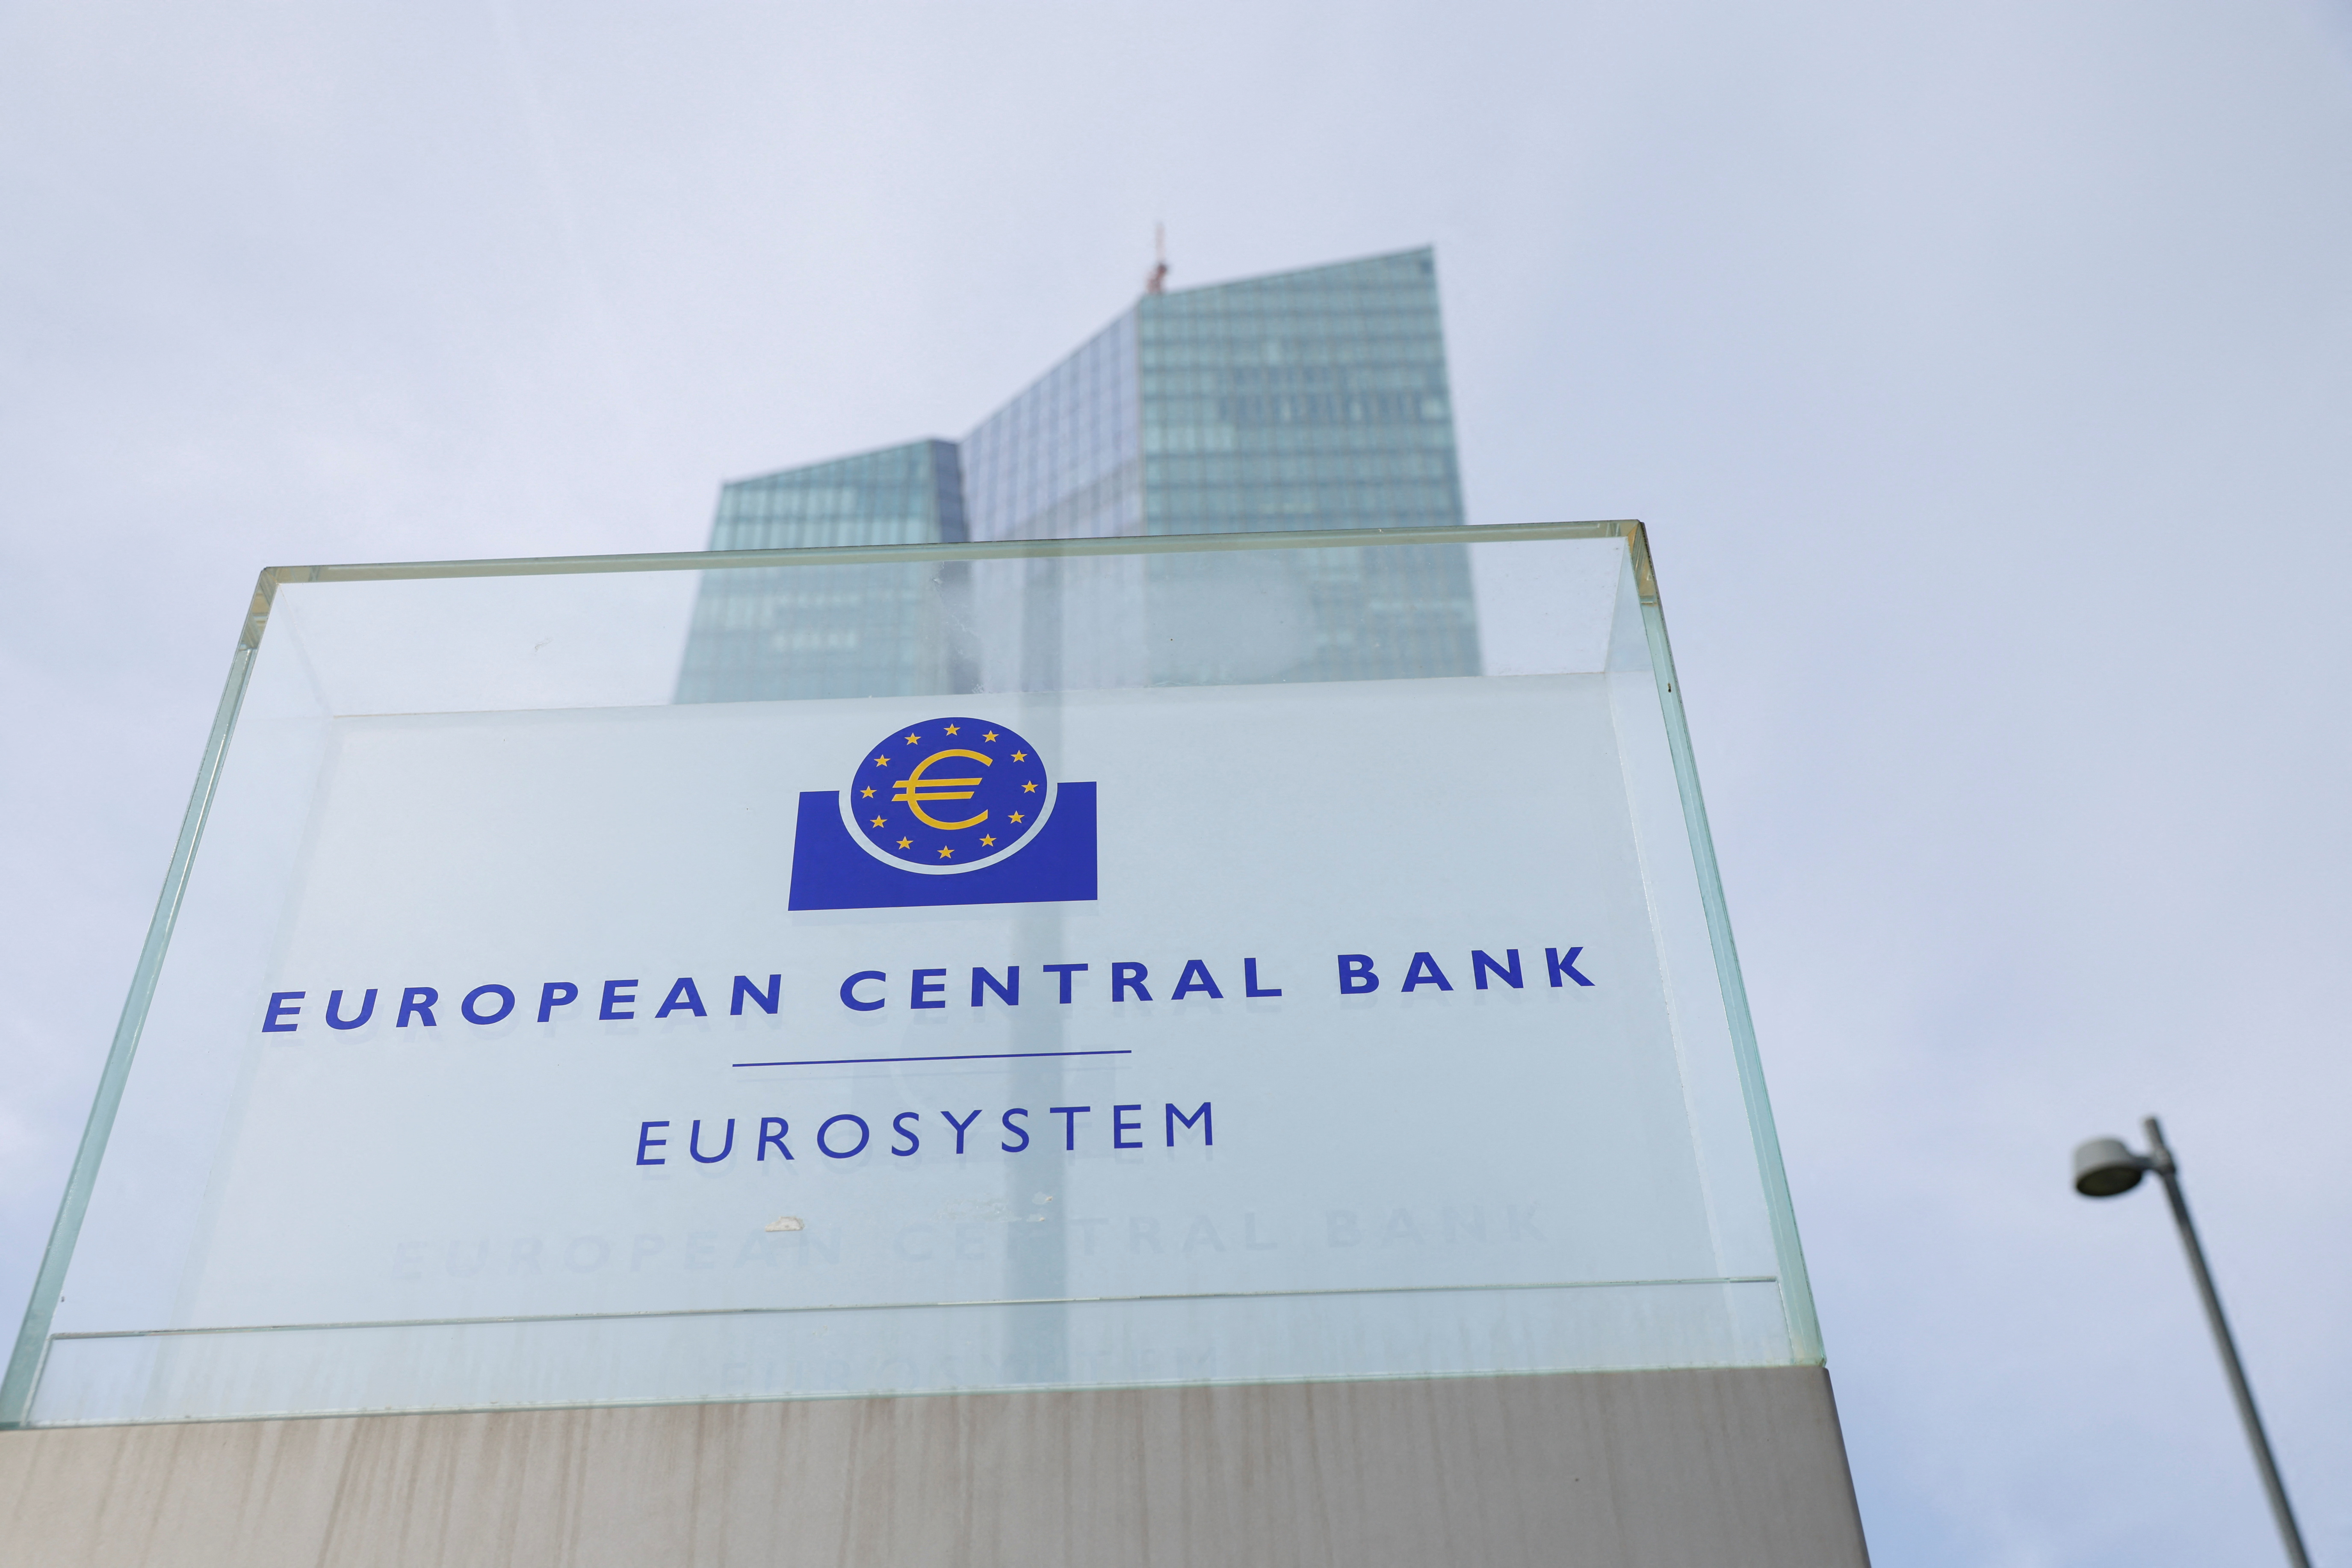 European Central Bank (ECB) headquarters in Frankfurt